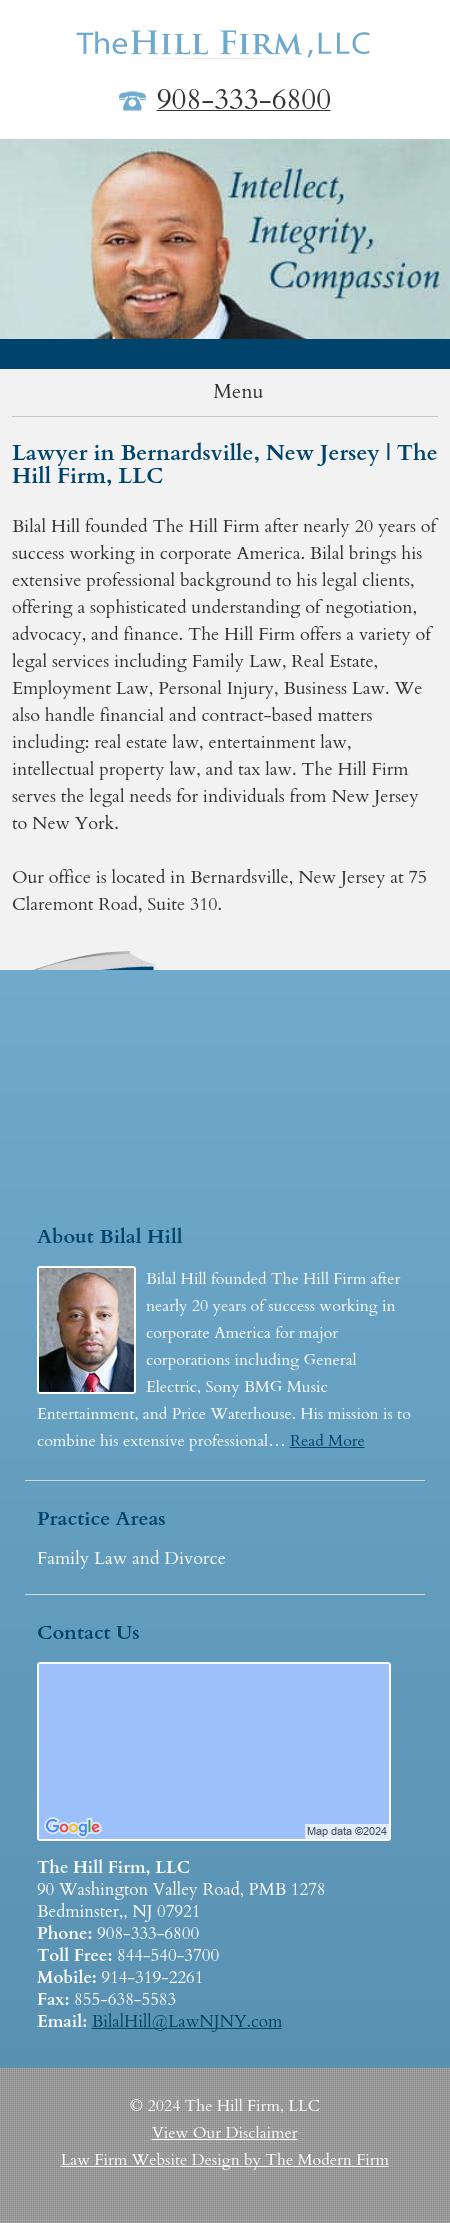 The Hill Firm, LLC - Basking Ridge NJ Lawyers